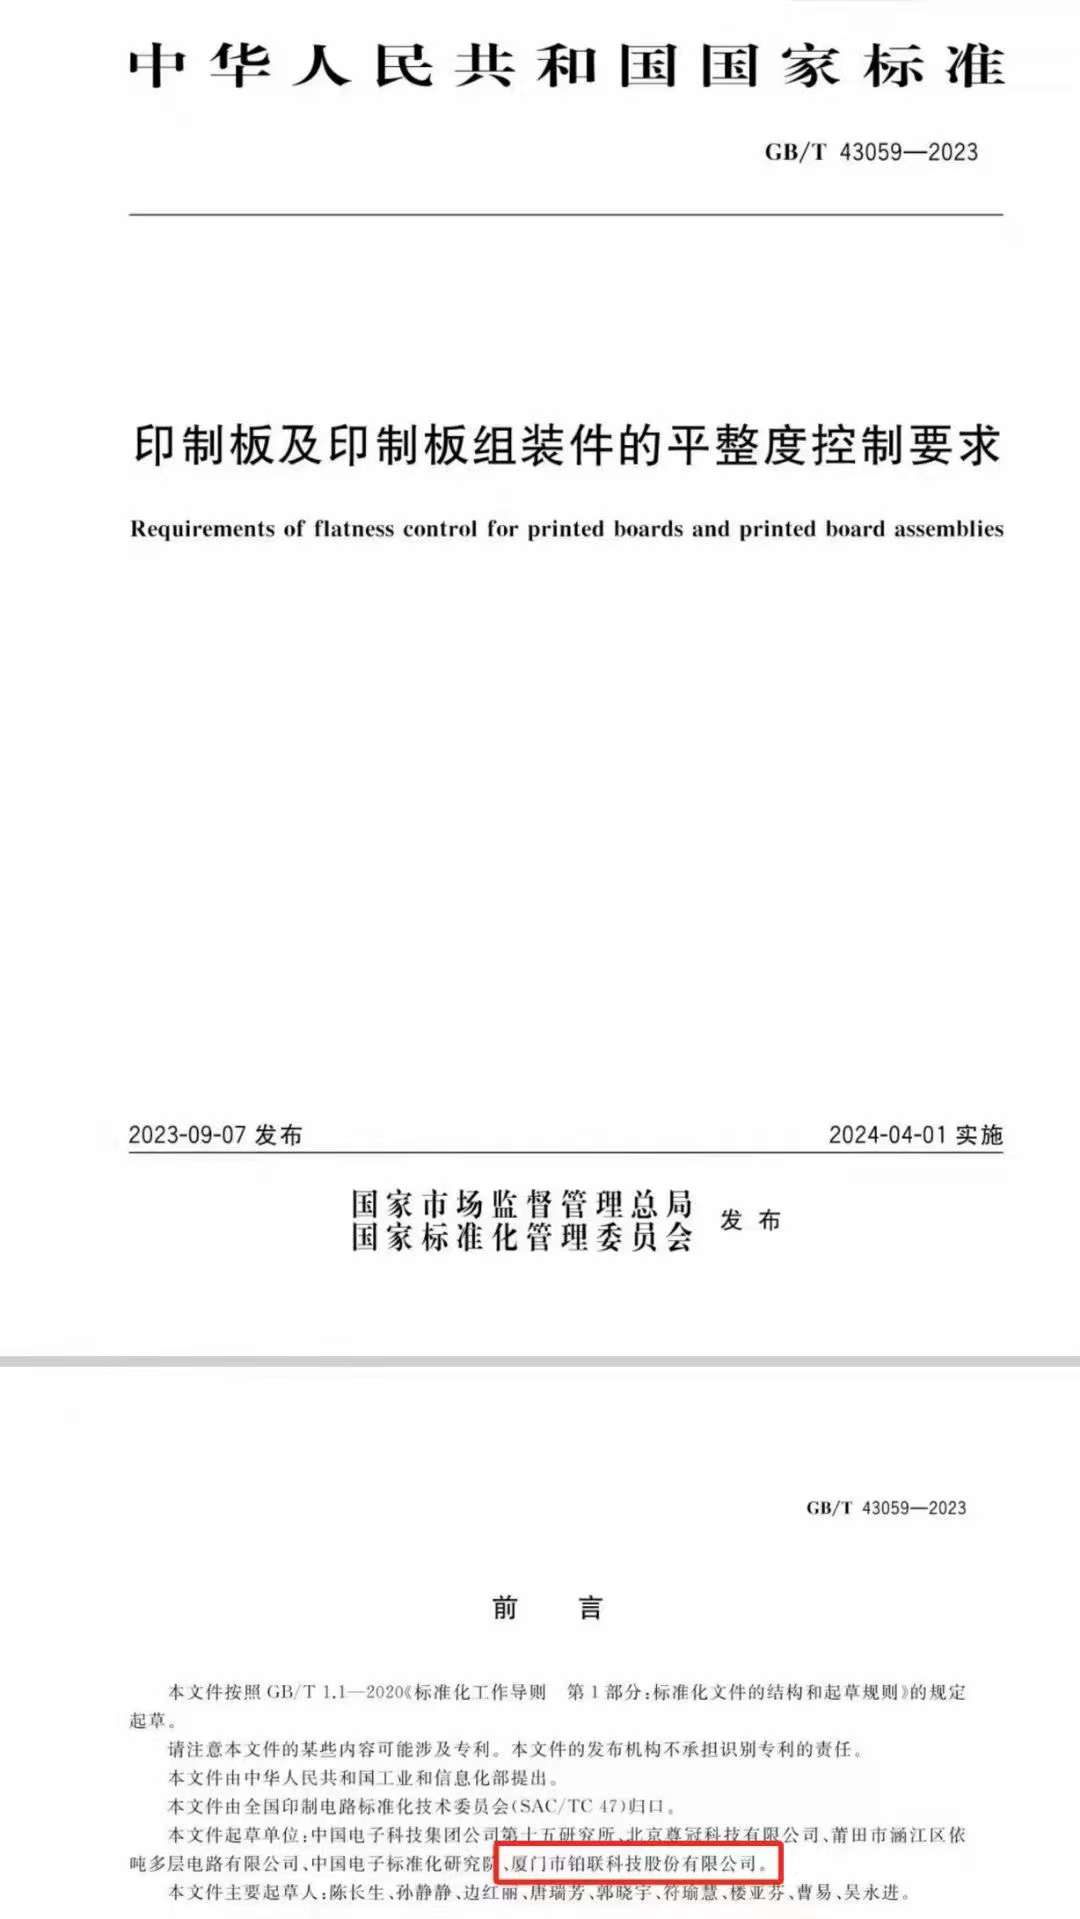 PRC National Standard  GBT 43059—2023  about PCBA Flatness control